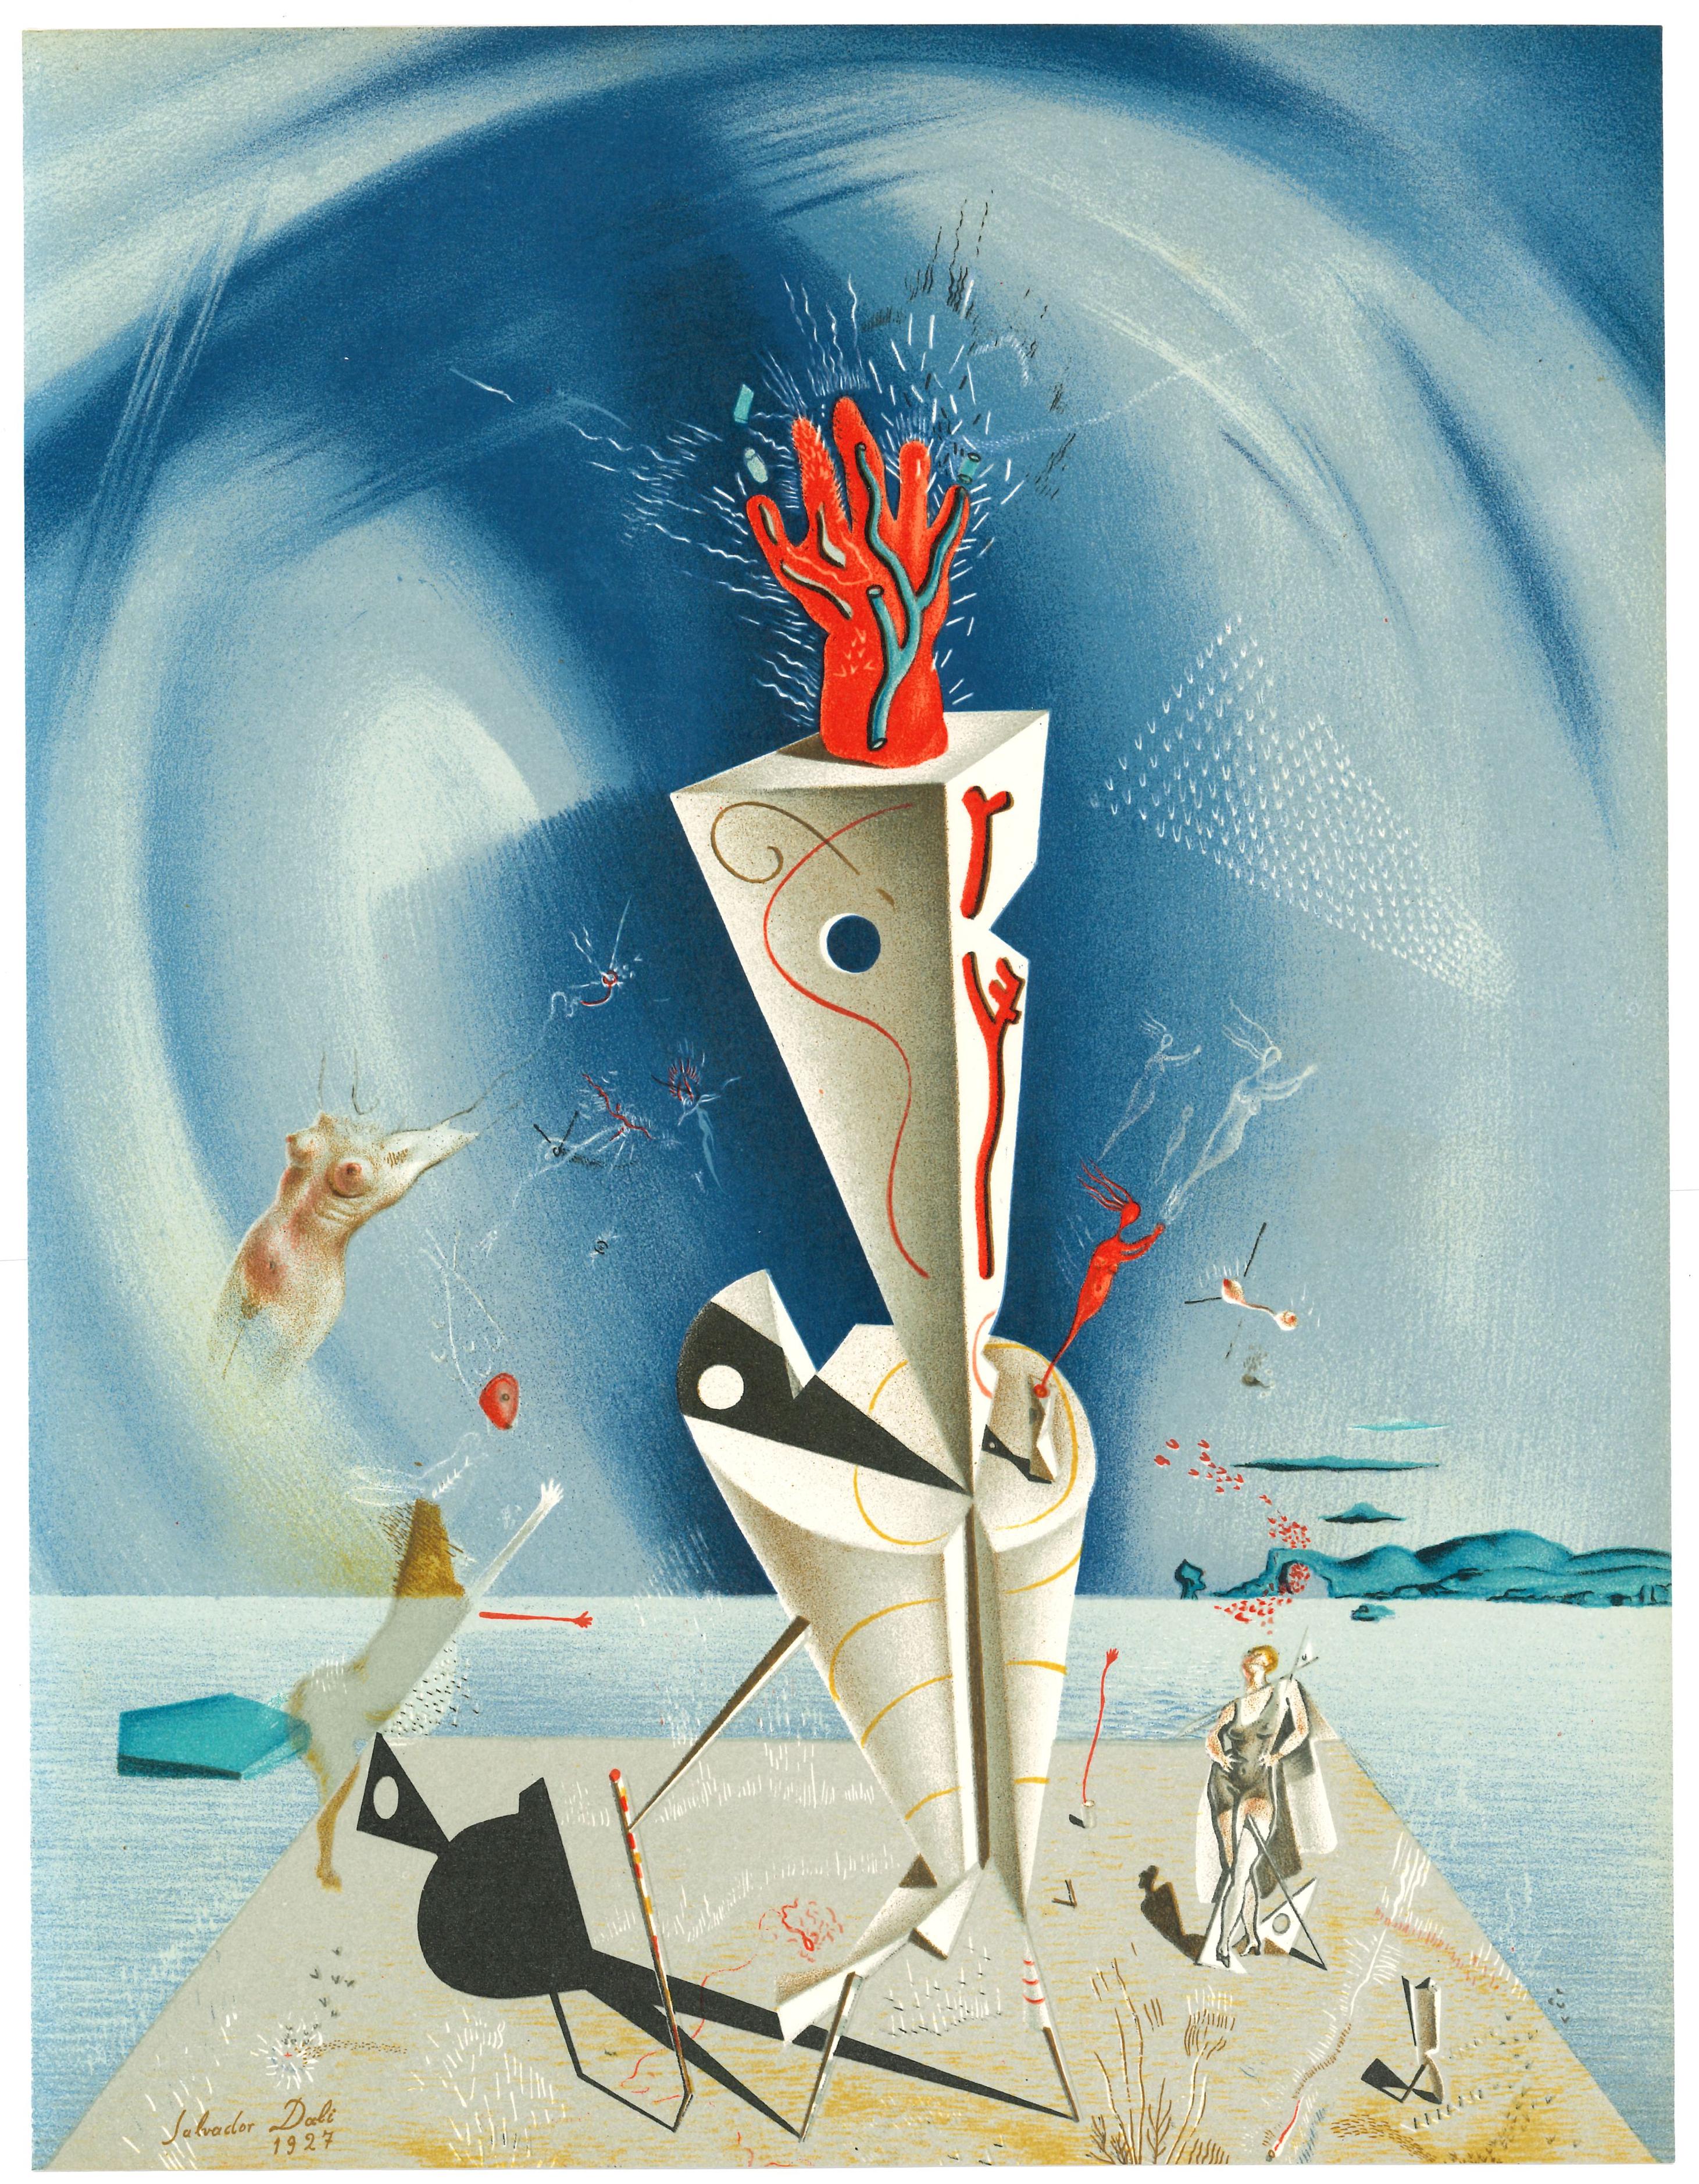 Salvador Dalí Print - Appareil et Main - Lithograph by Salvador Dalì - 1974